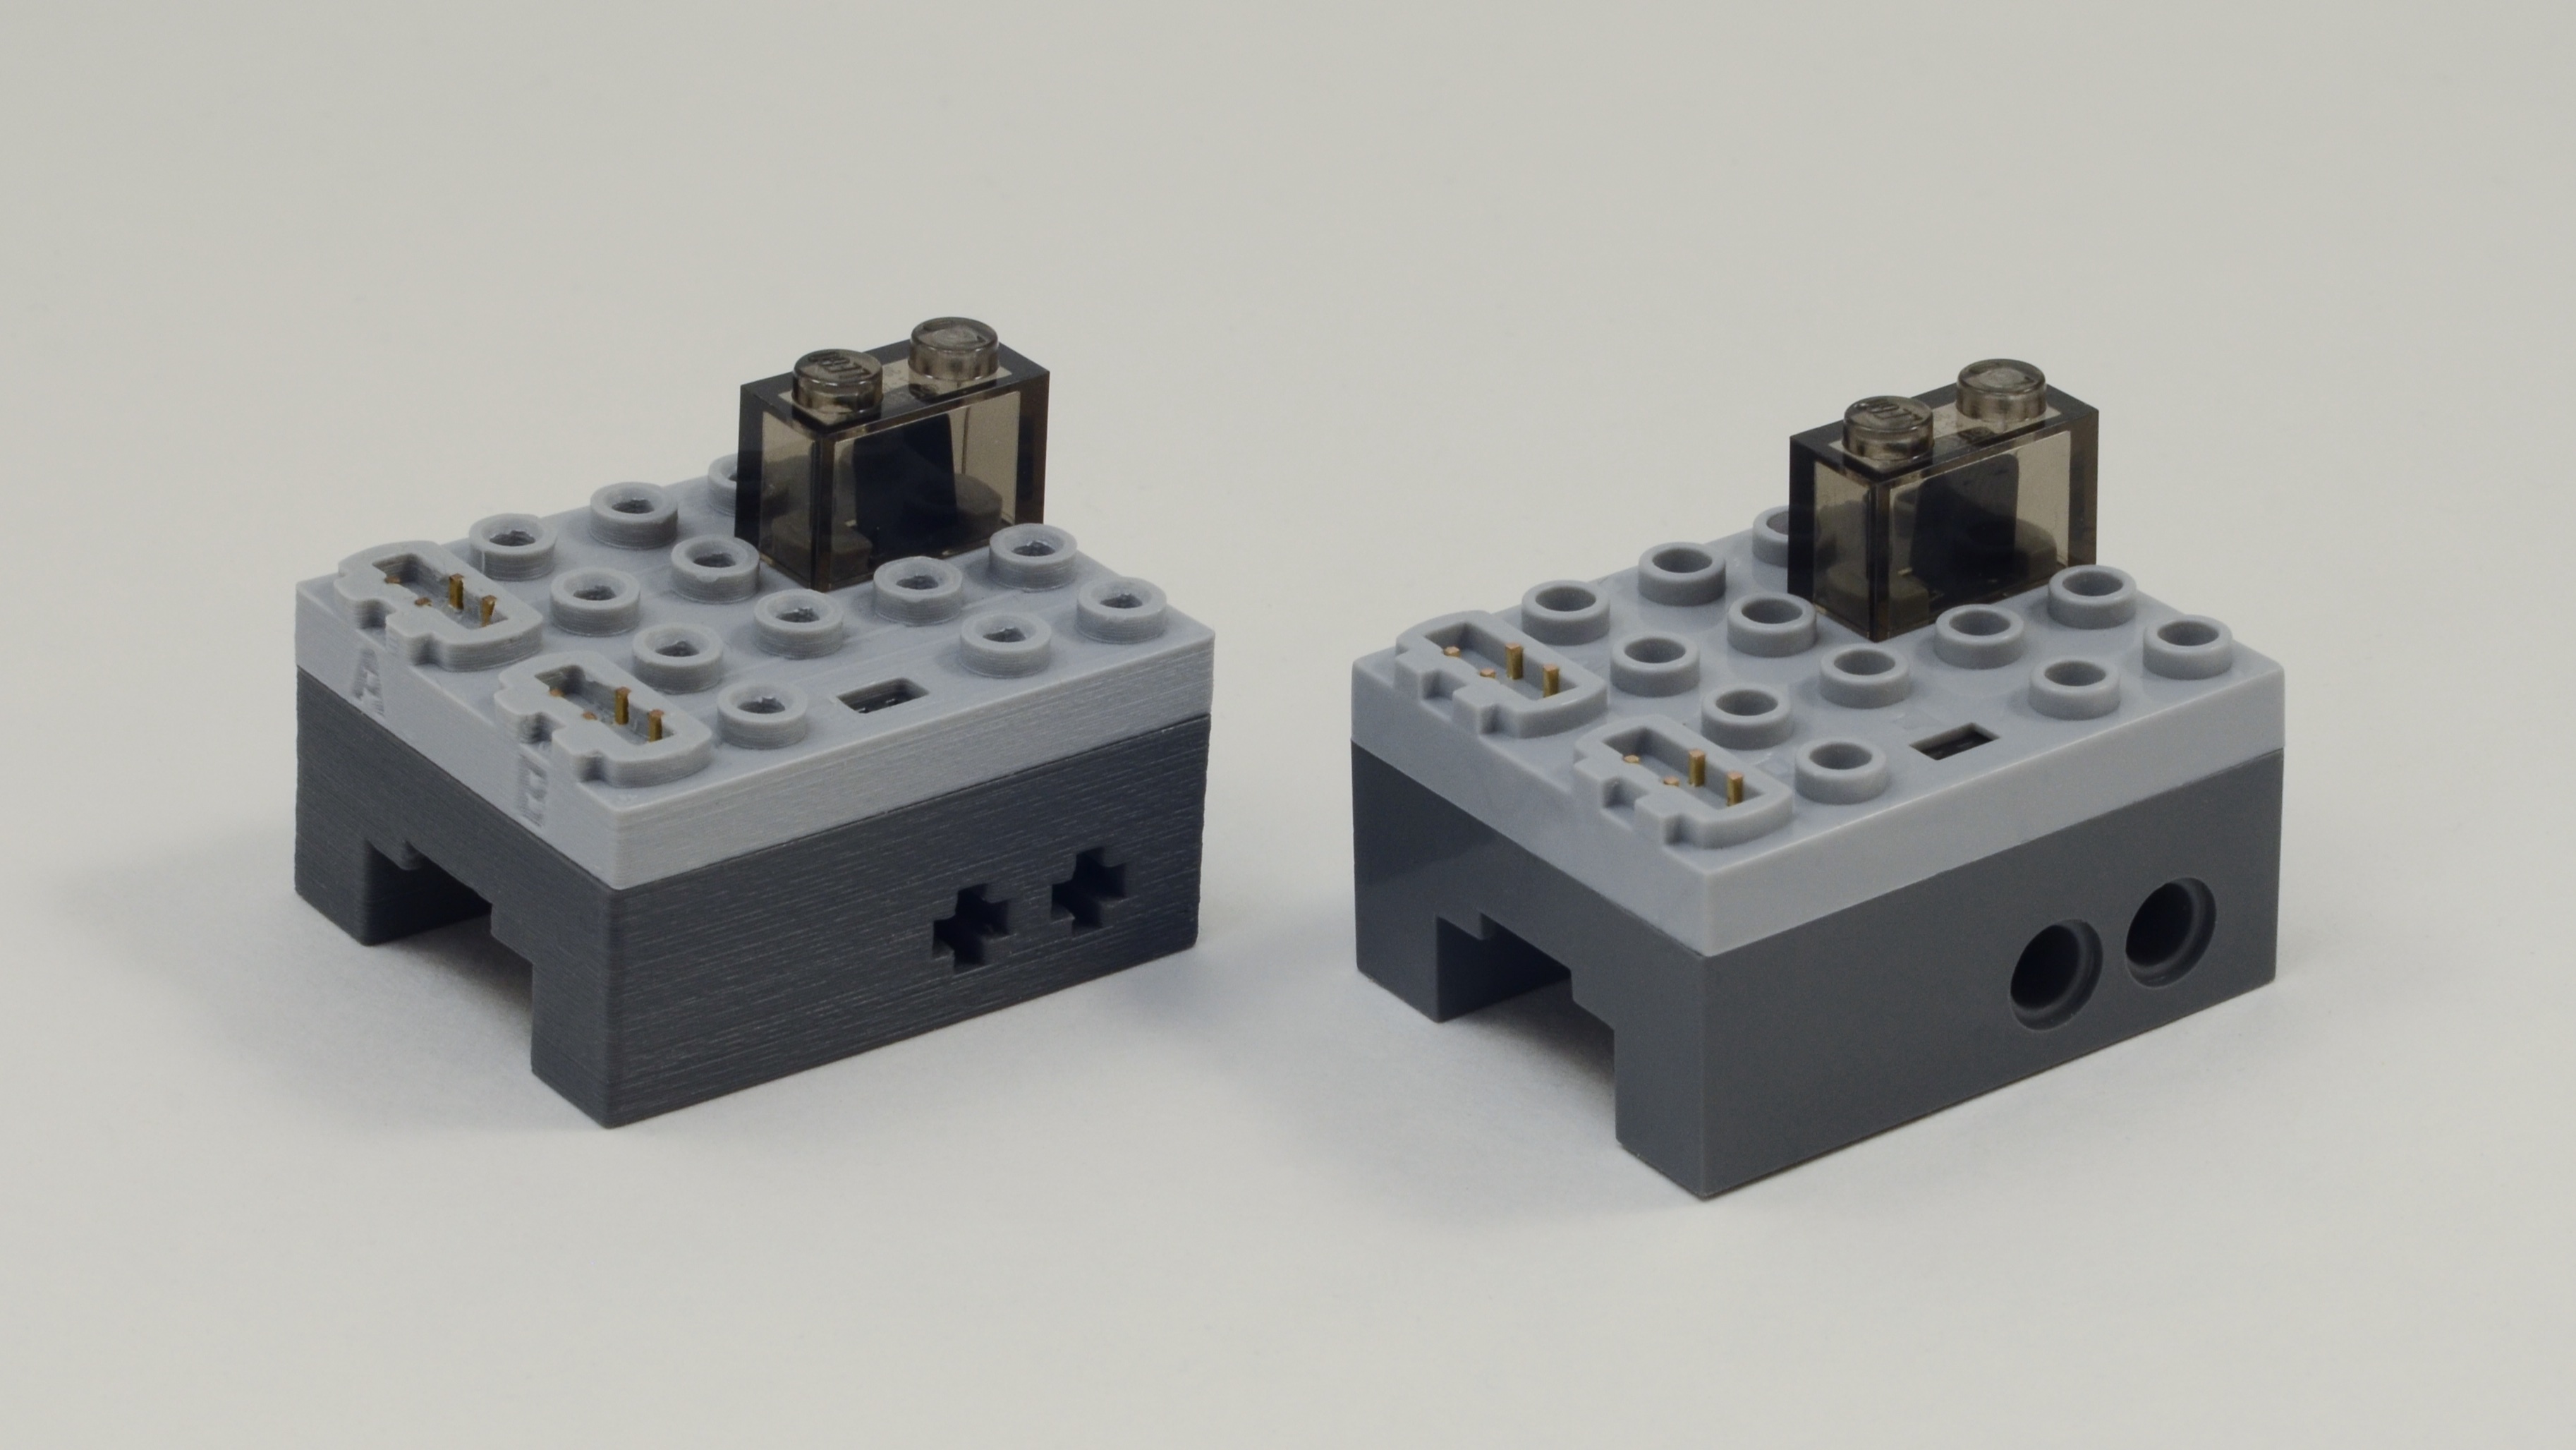 1st generation 3D printed PFx Brick (left) new 2nd generation PFx Brick (right) injected molded in ABS